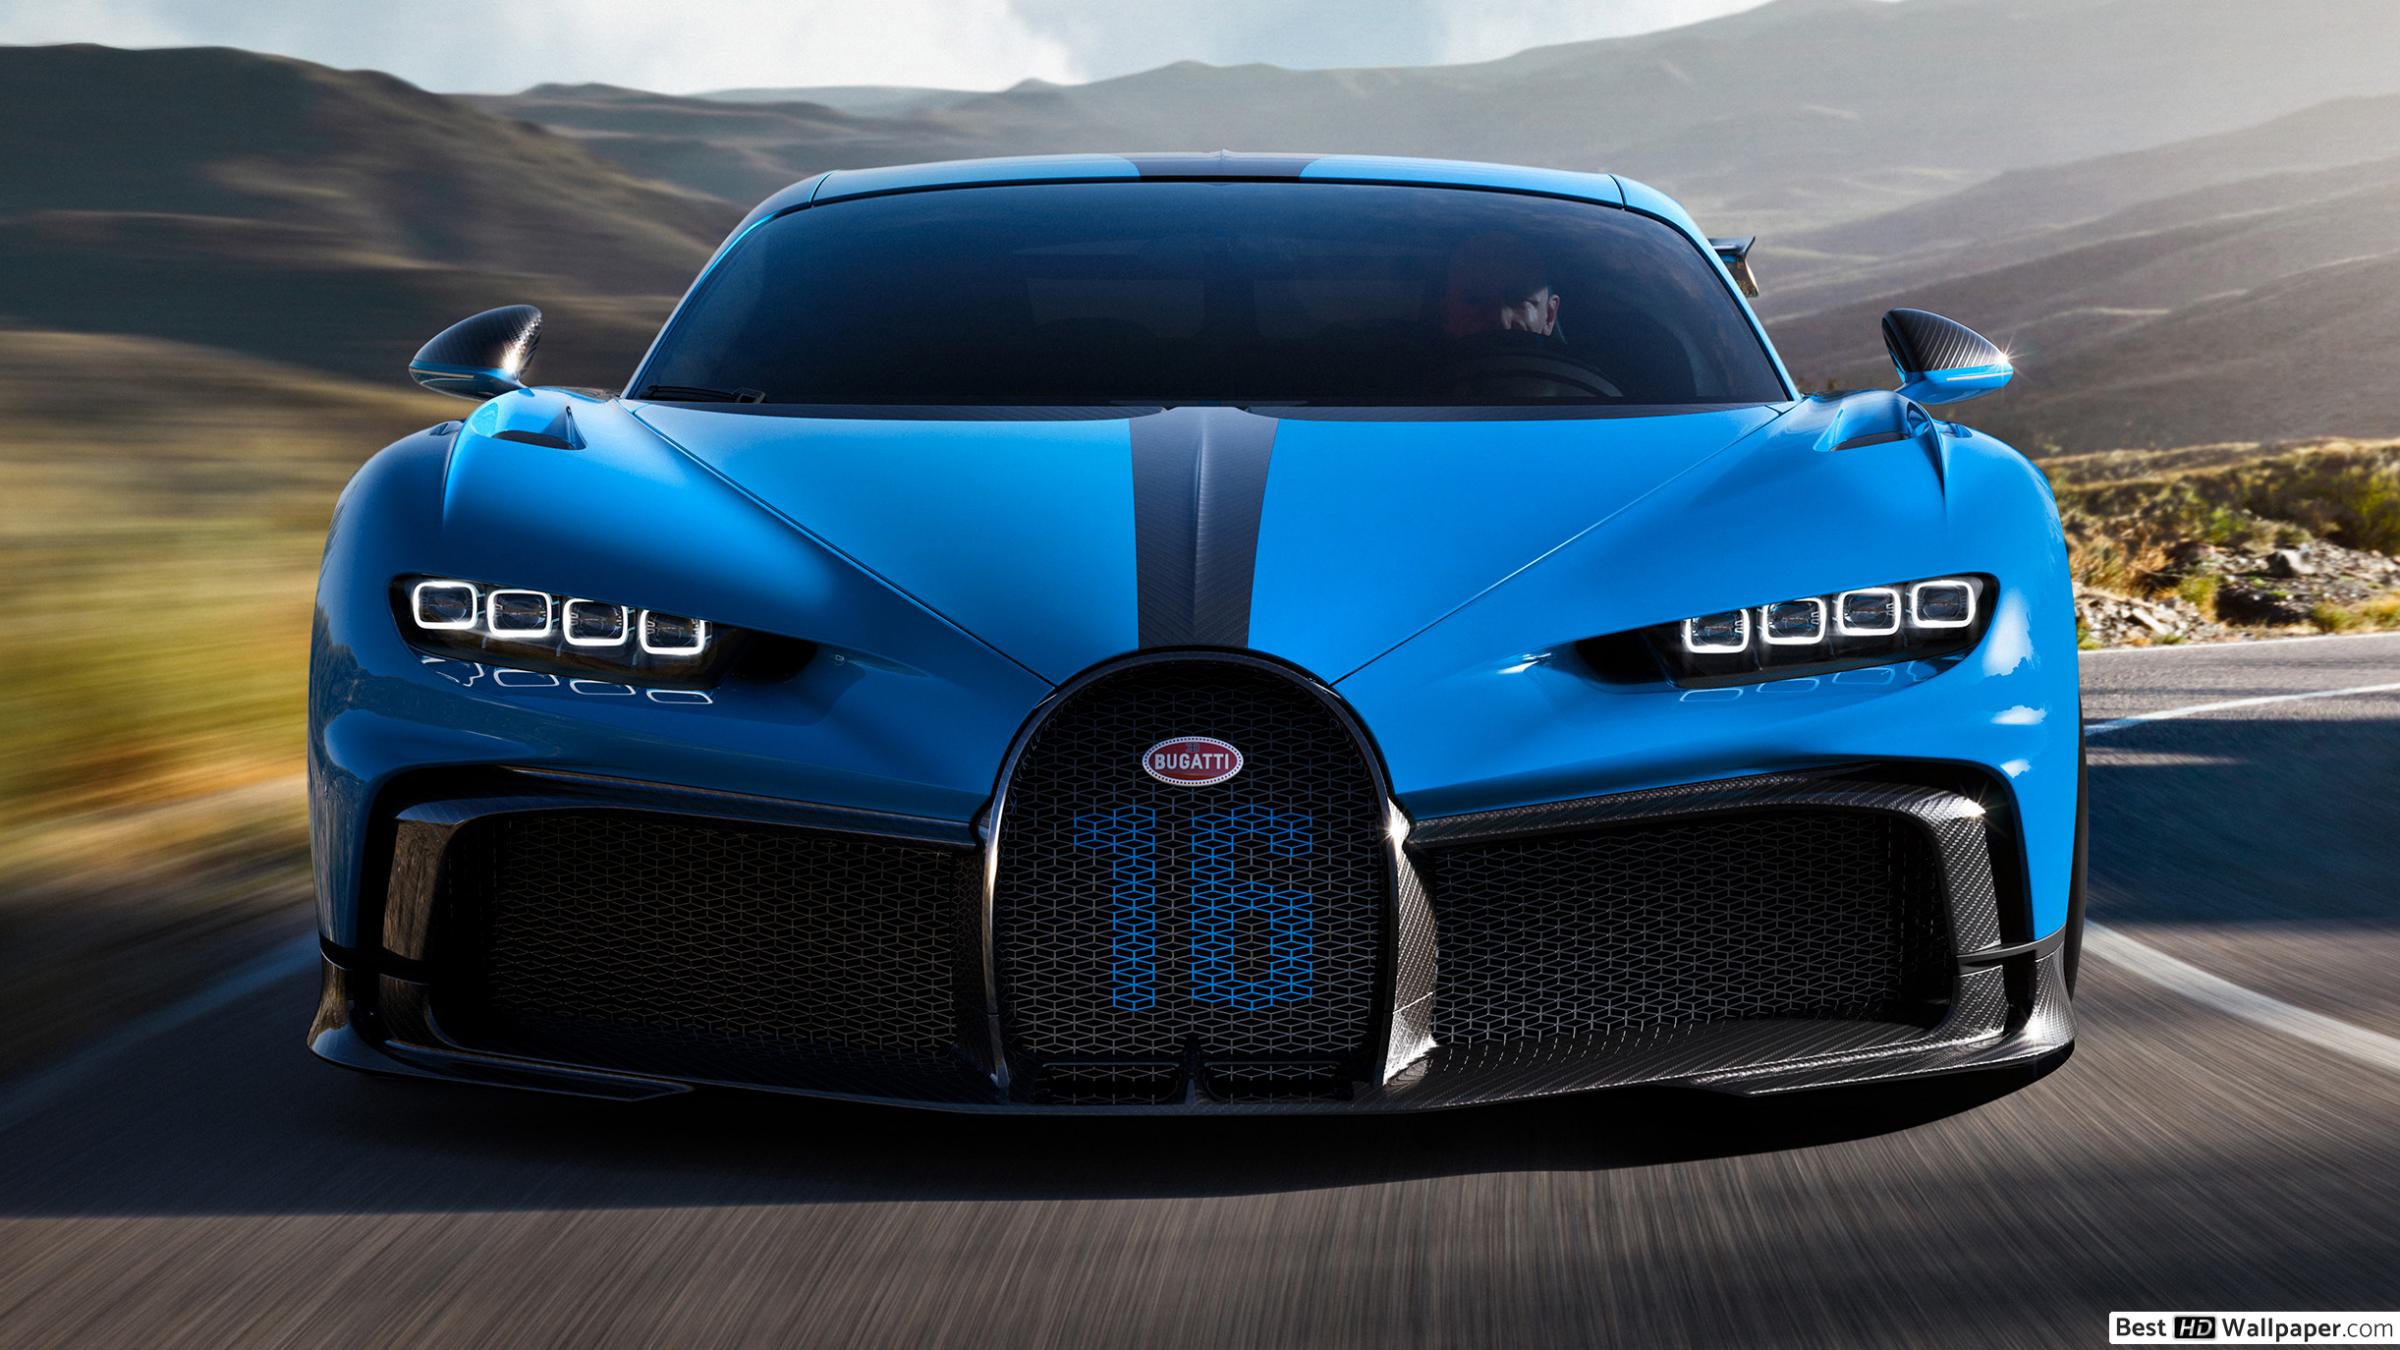 Blue Bugatti chiron front side view HD wallpaper download